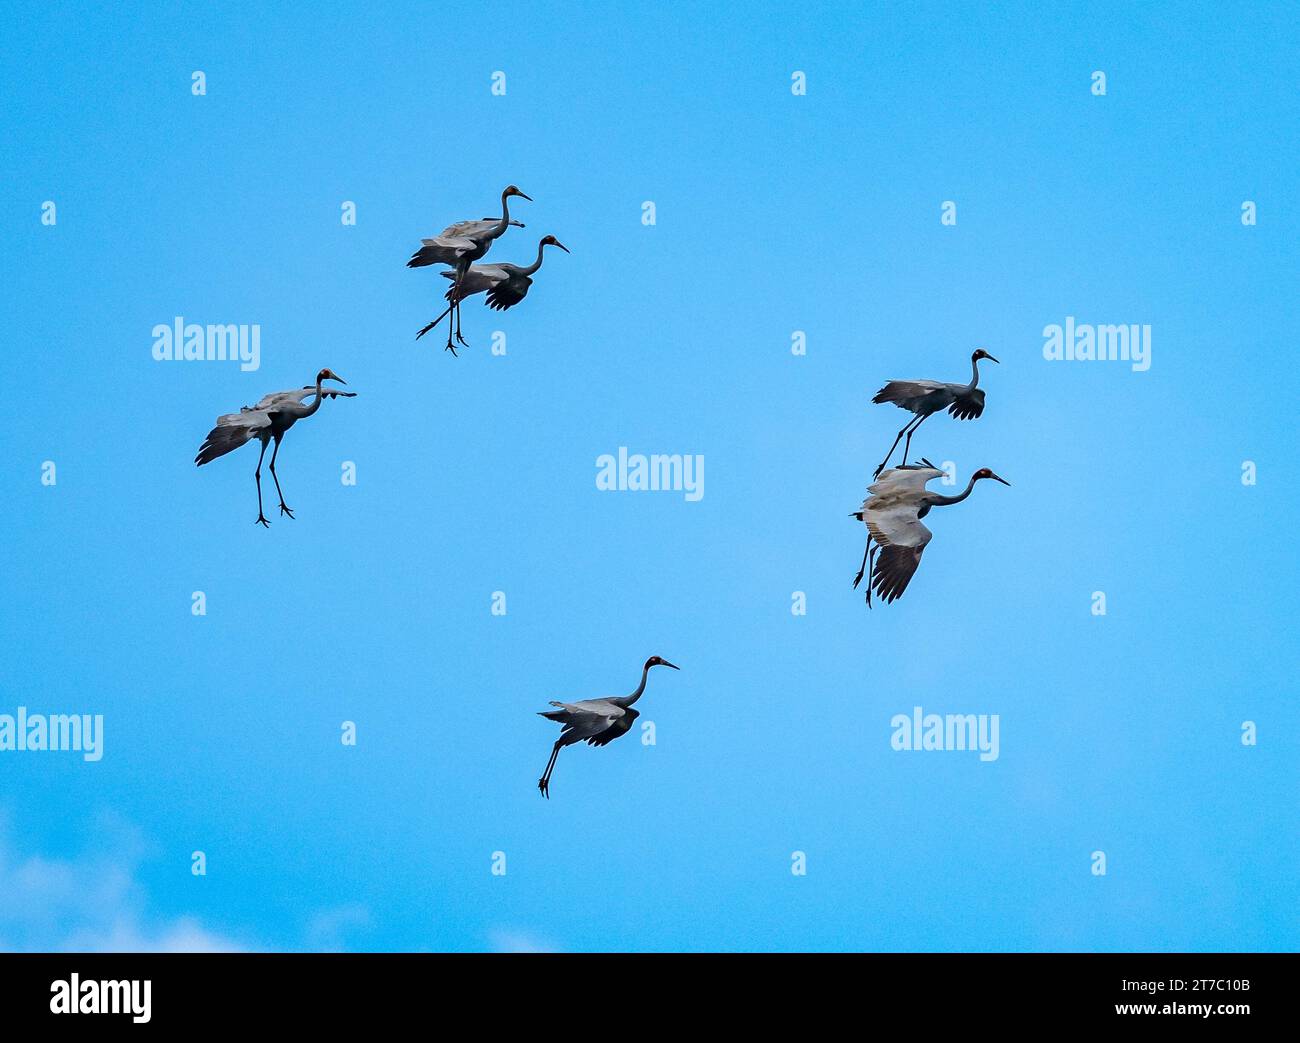 A flock Sarus Cranes (Antigone antigone) flying in blue sky. Queensland, Australia. Stock Photo